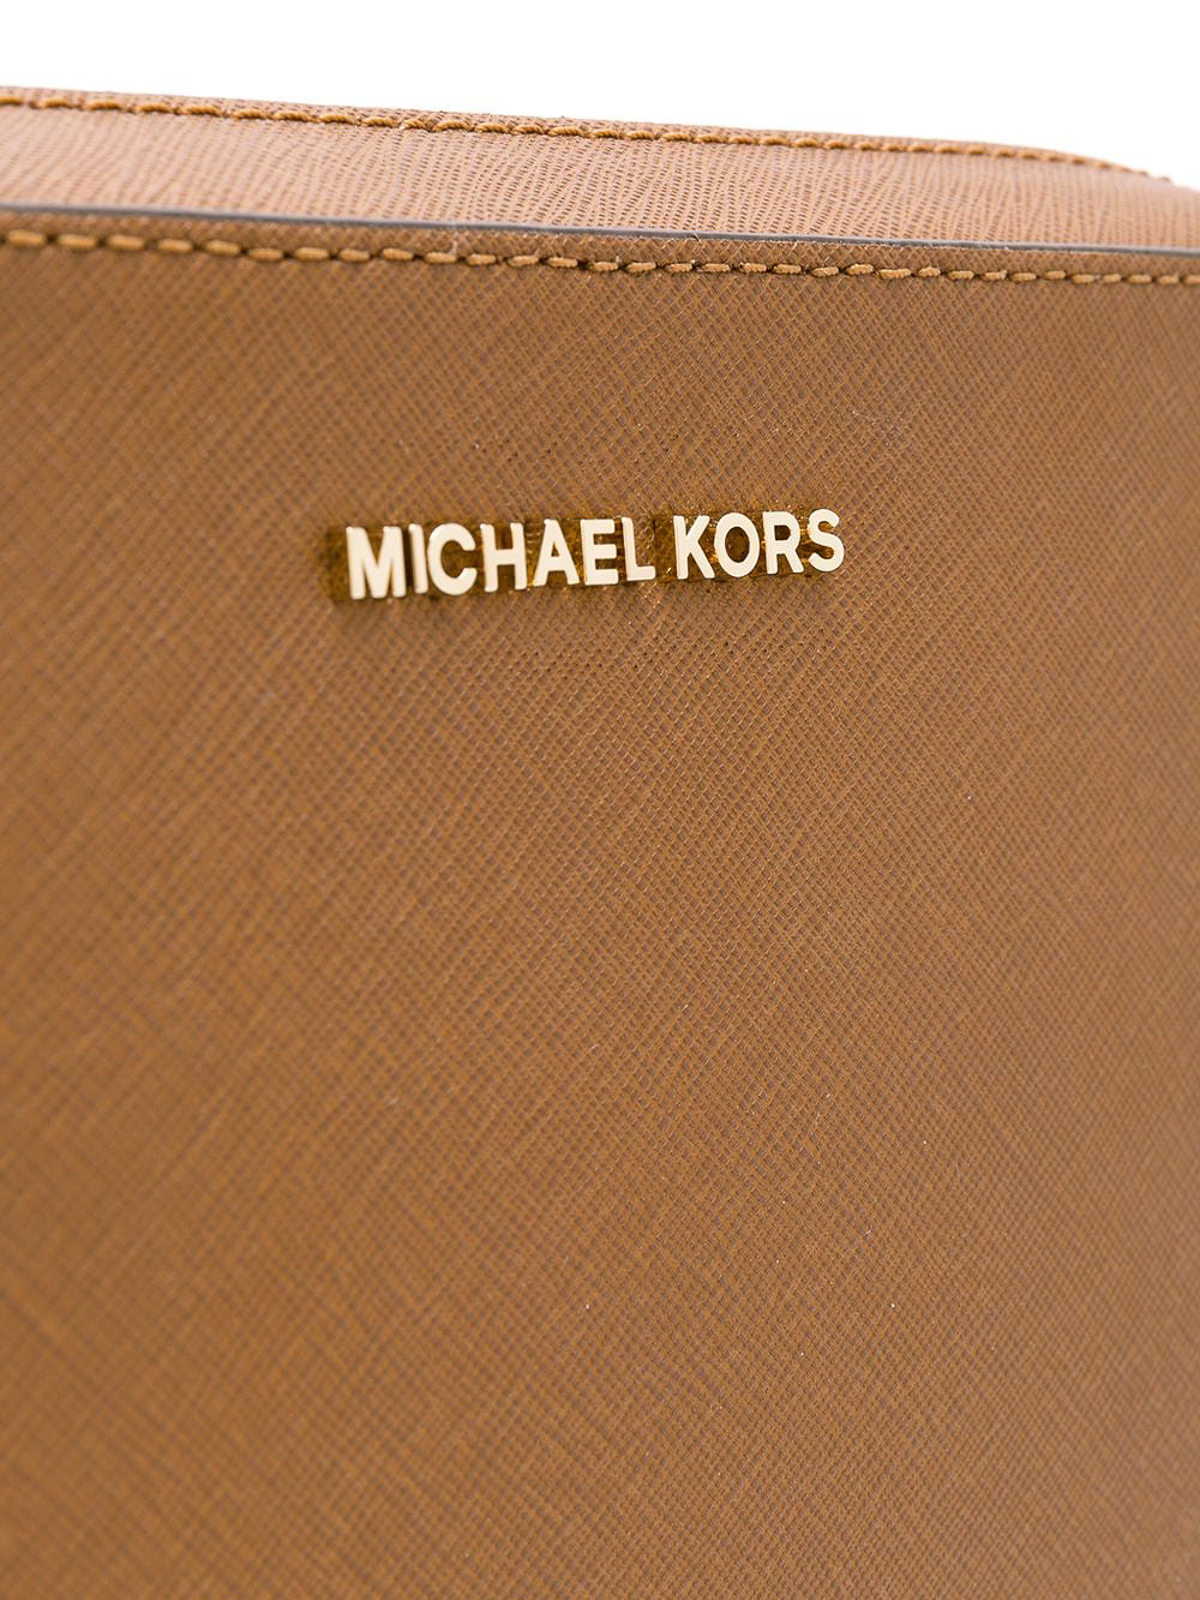 Michael Kors Jet Set Large Leather Crossbody Bag